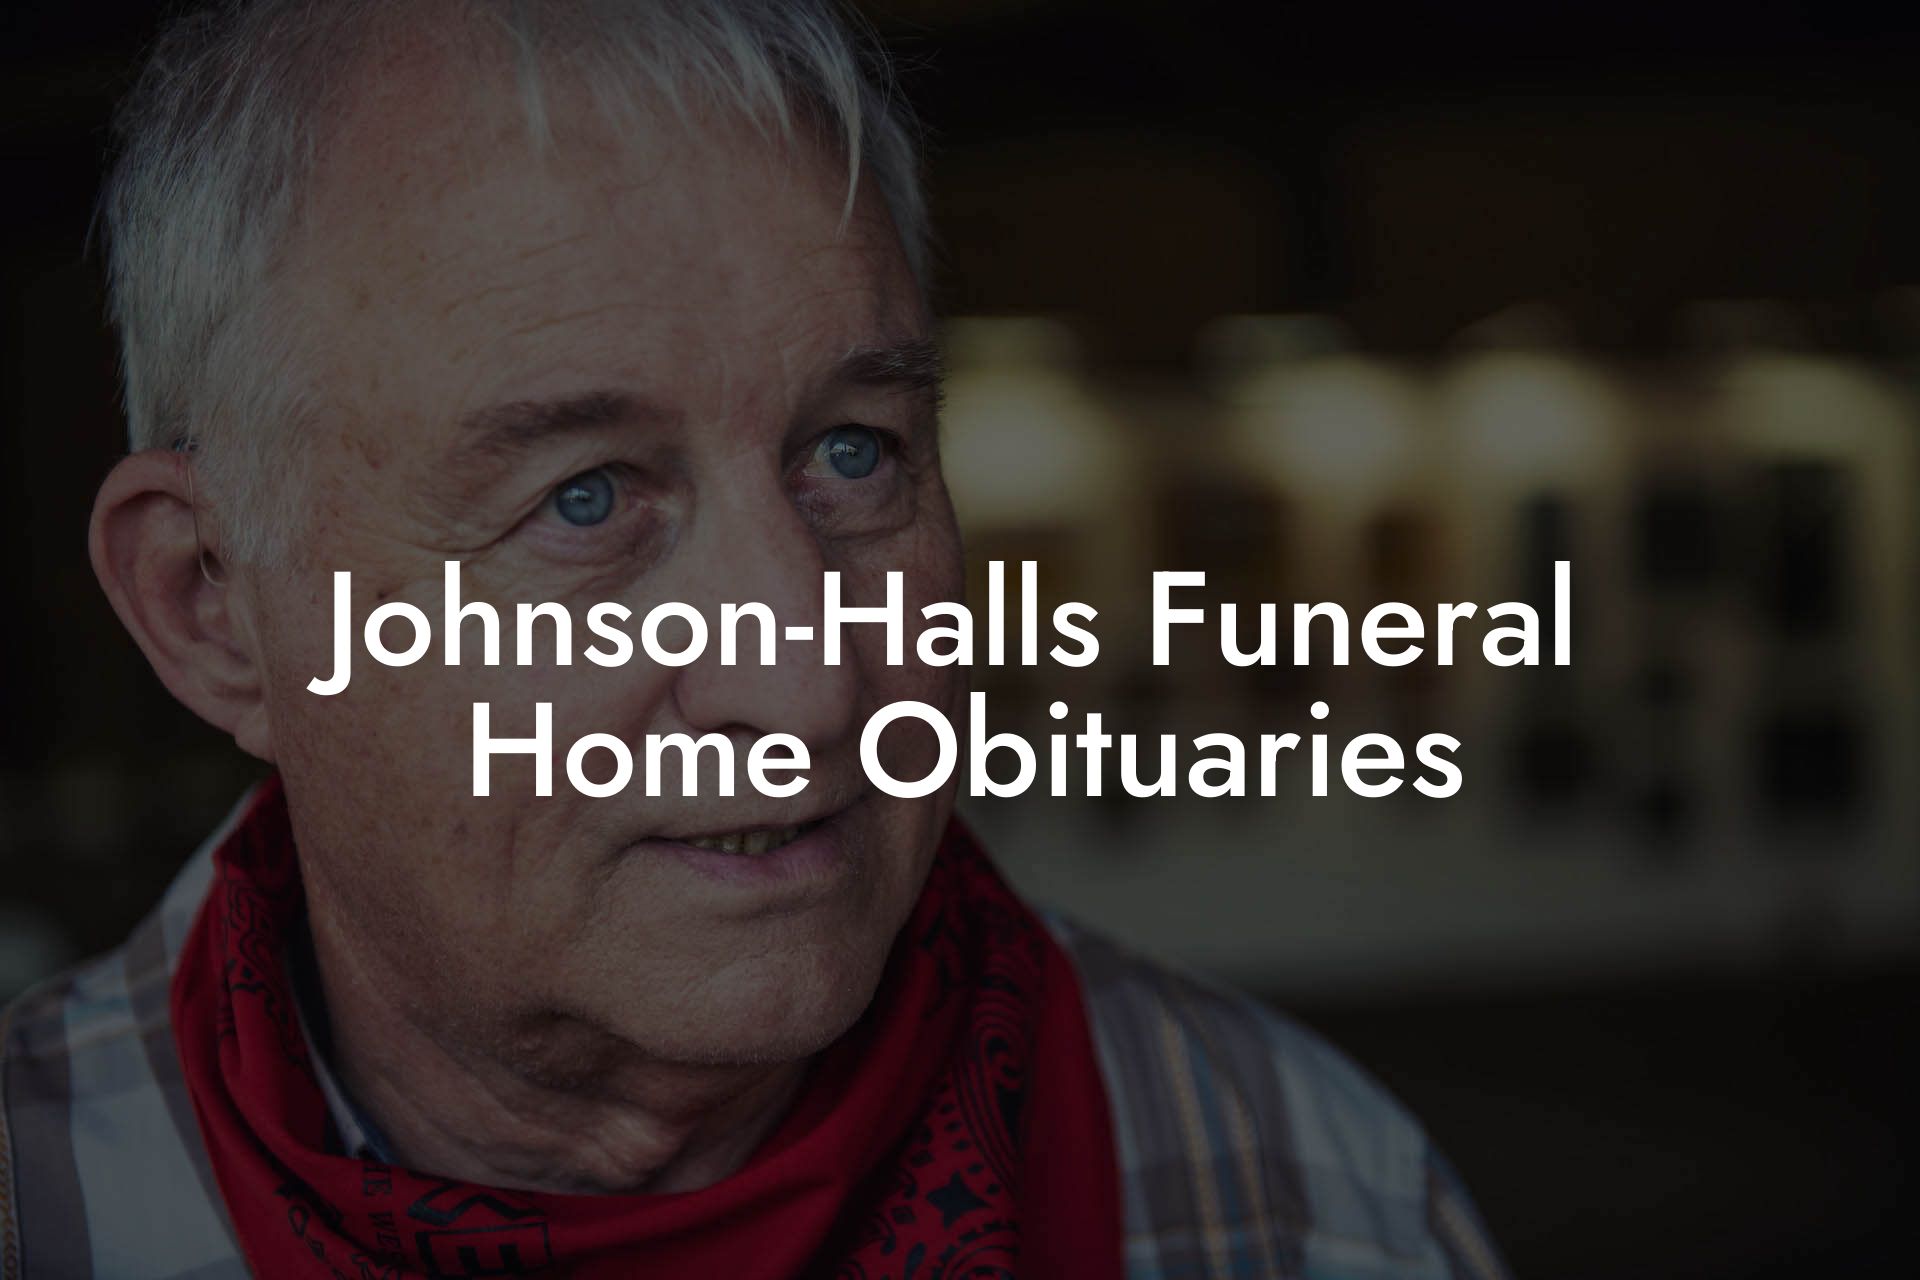 Johnson-Halls Funeral Home Obituaries